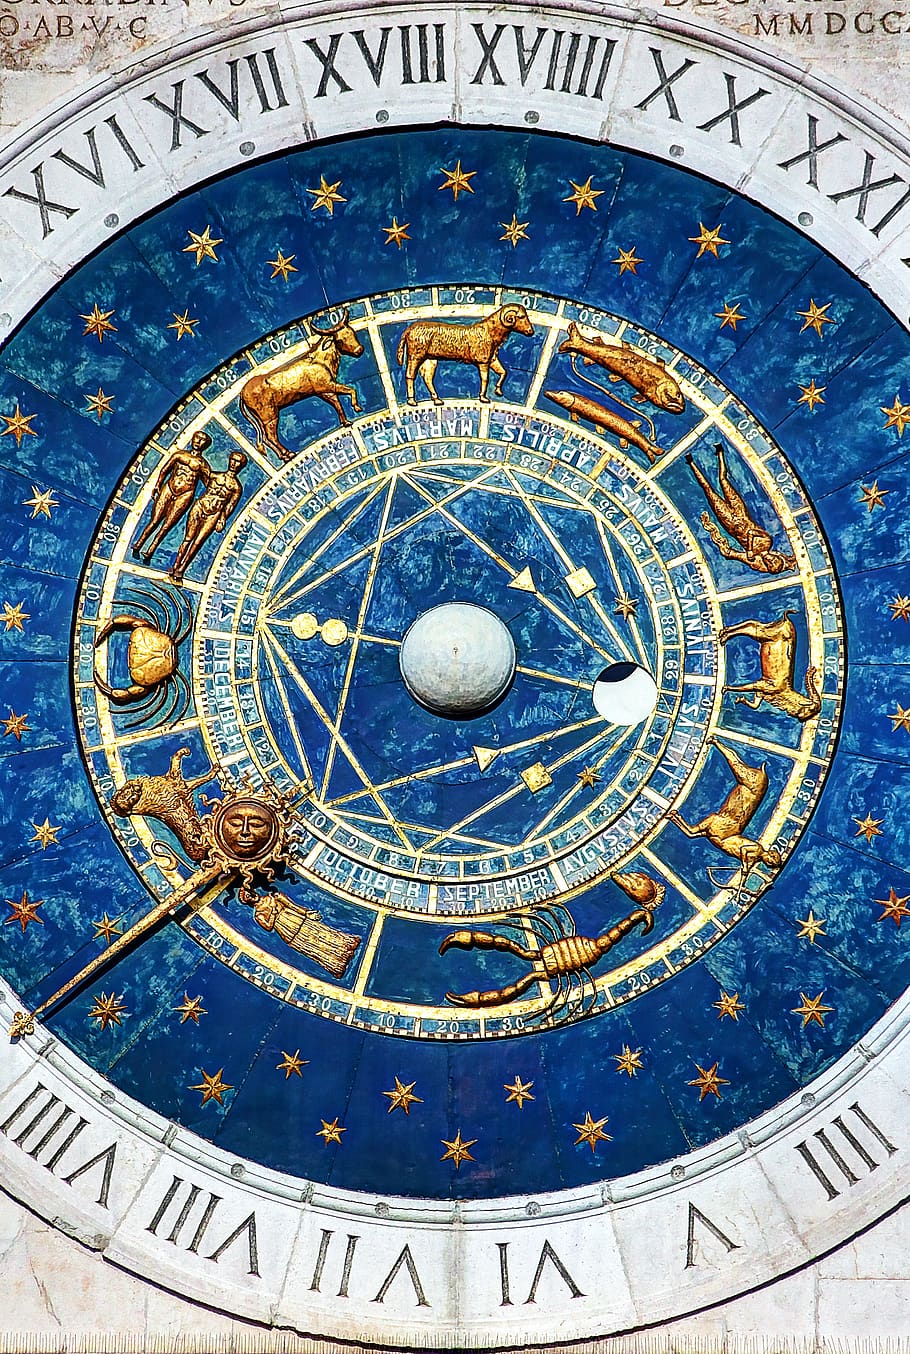 Padova, arloji, torre, italia, waktu, zodiak, tanda astrologi, ruang, jam, angka romawi